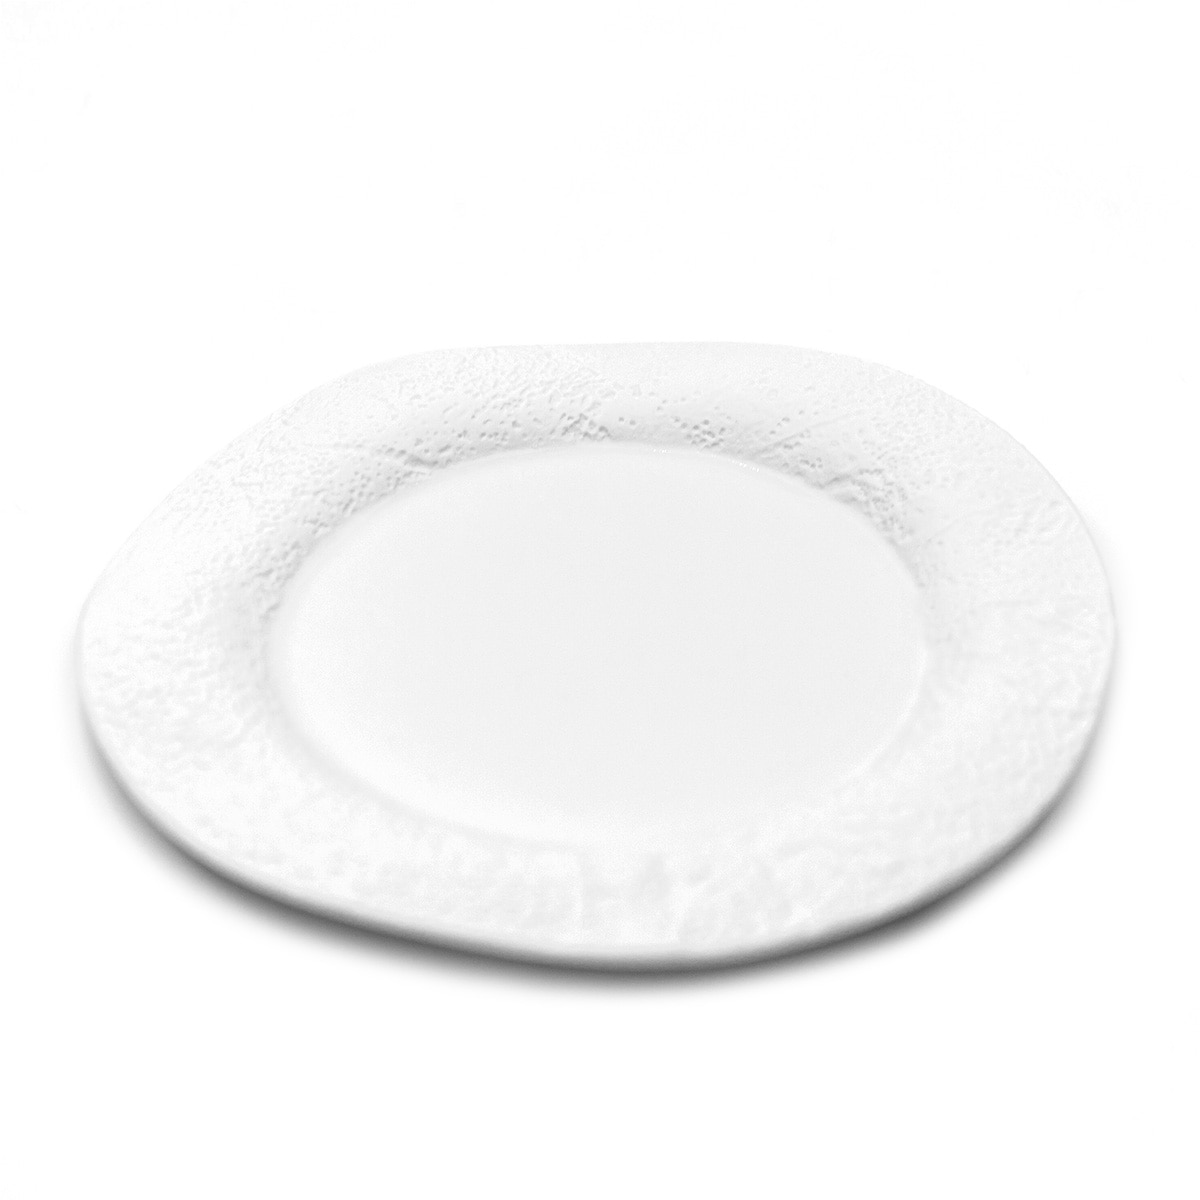 PORDAMSATaffoni Plate 포르담사 타포니 플레이트 (Ø31)MADE IN SPAIN